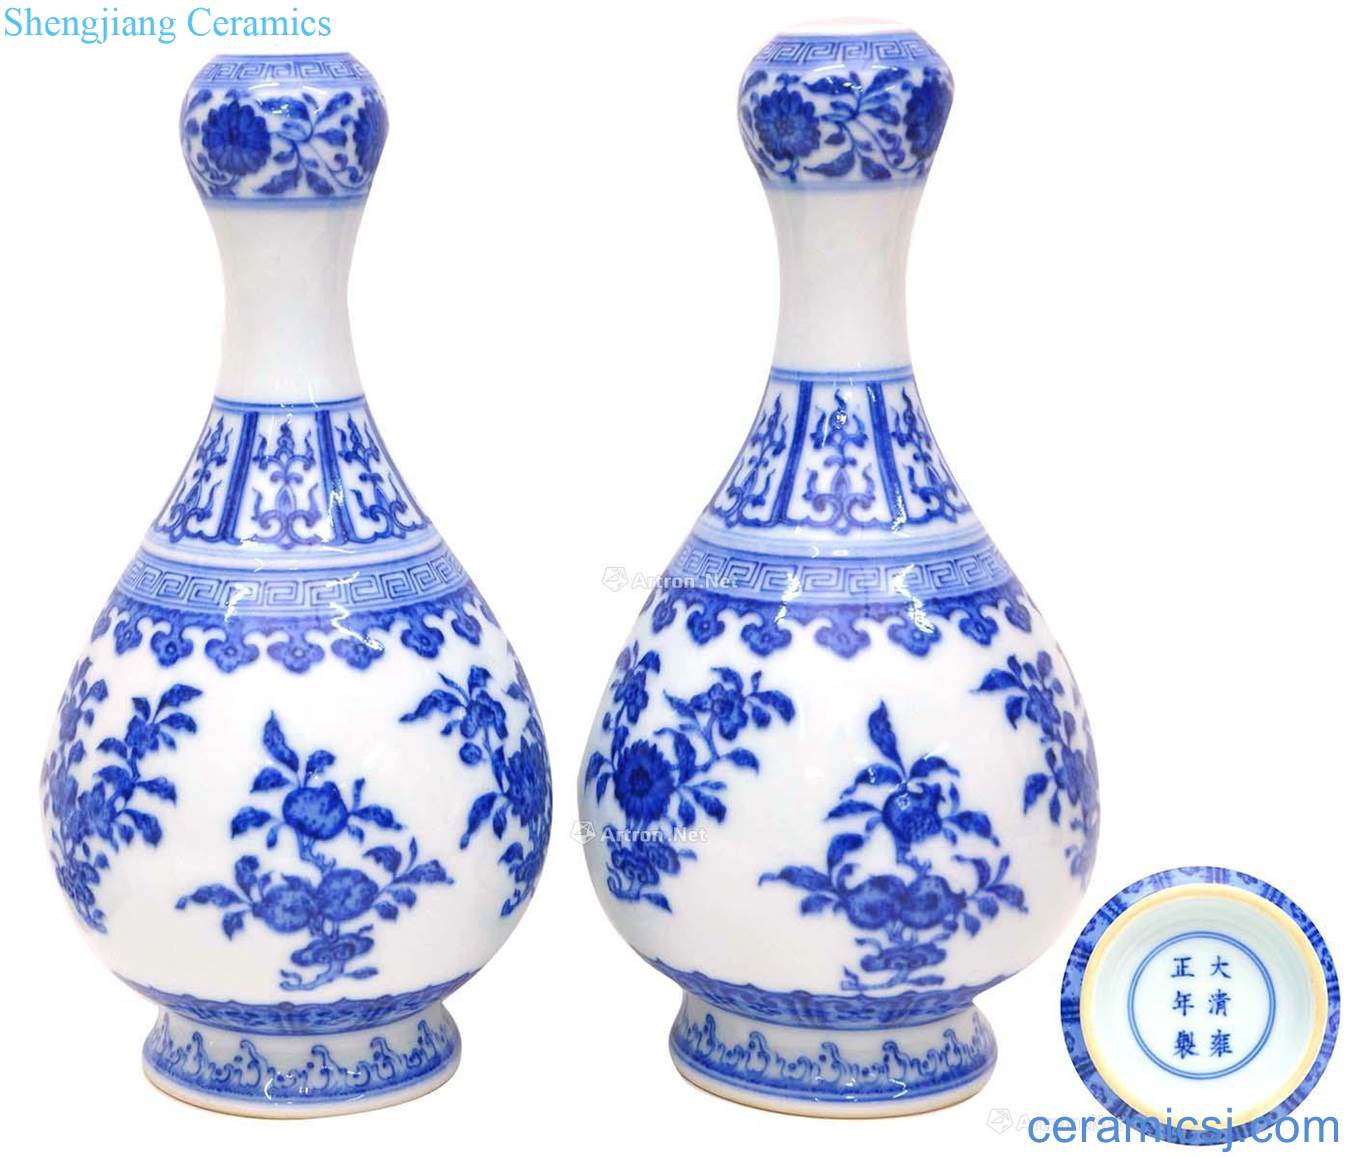 Qing dynasty blue-and-white sanduo garlic bottles